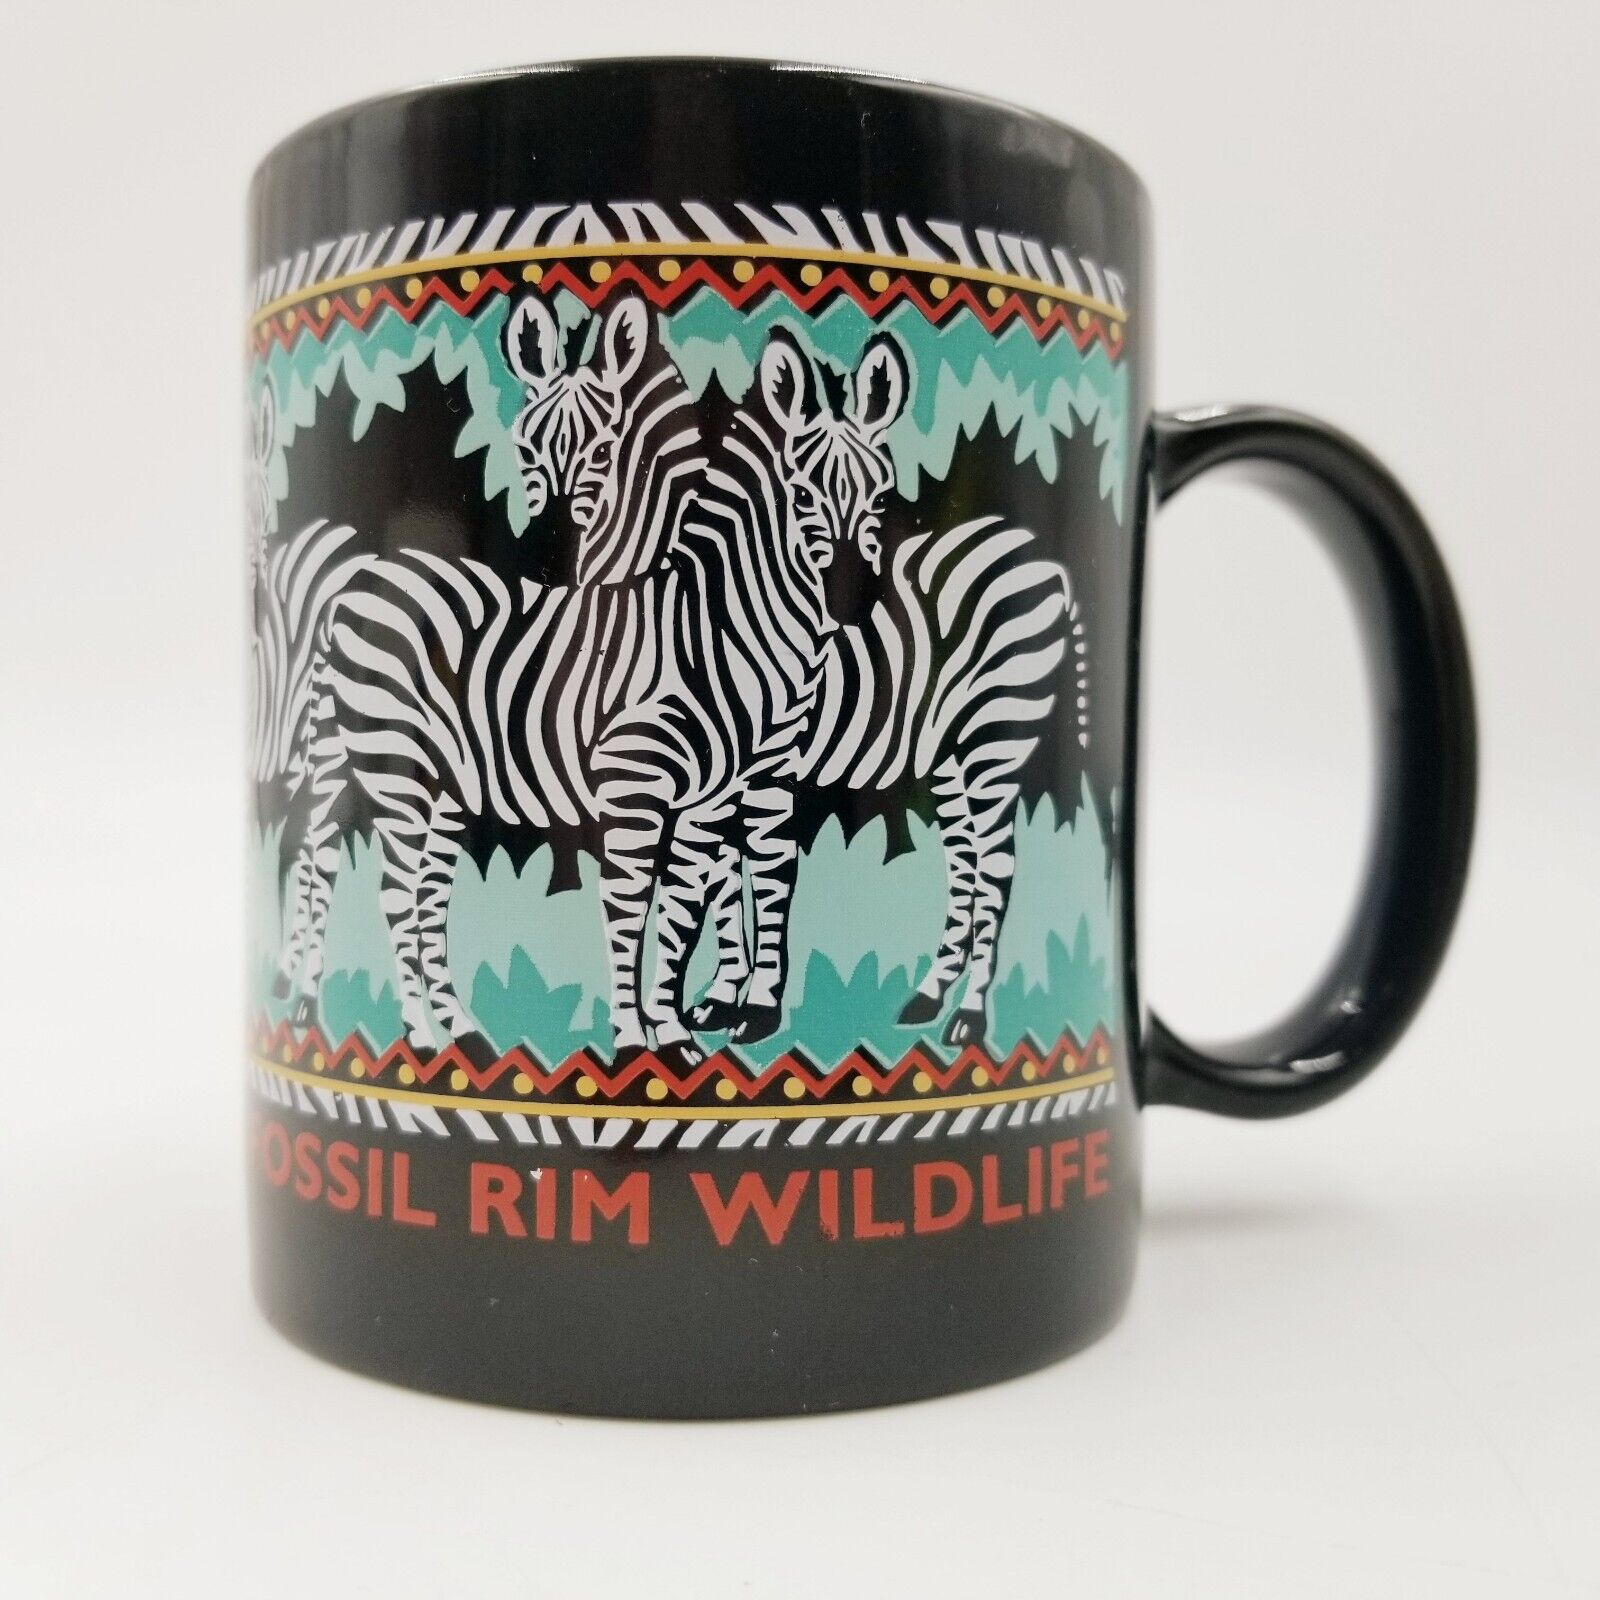 Vintage Fossil Rim Wildlife Coffee Cup Mug Zebras Black 